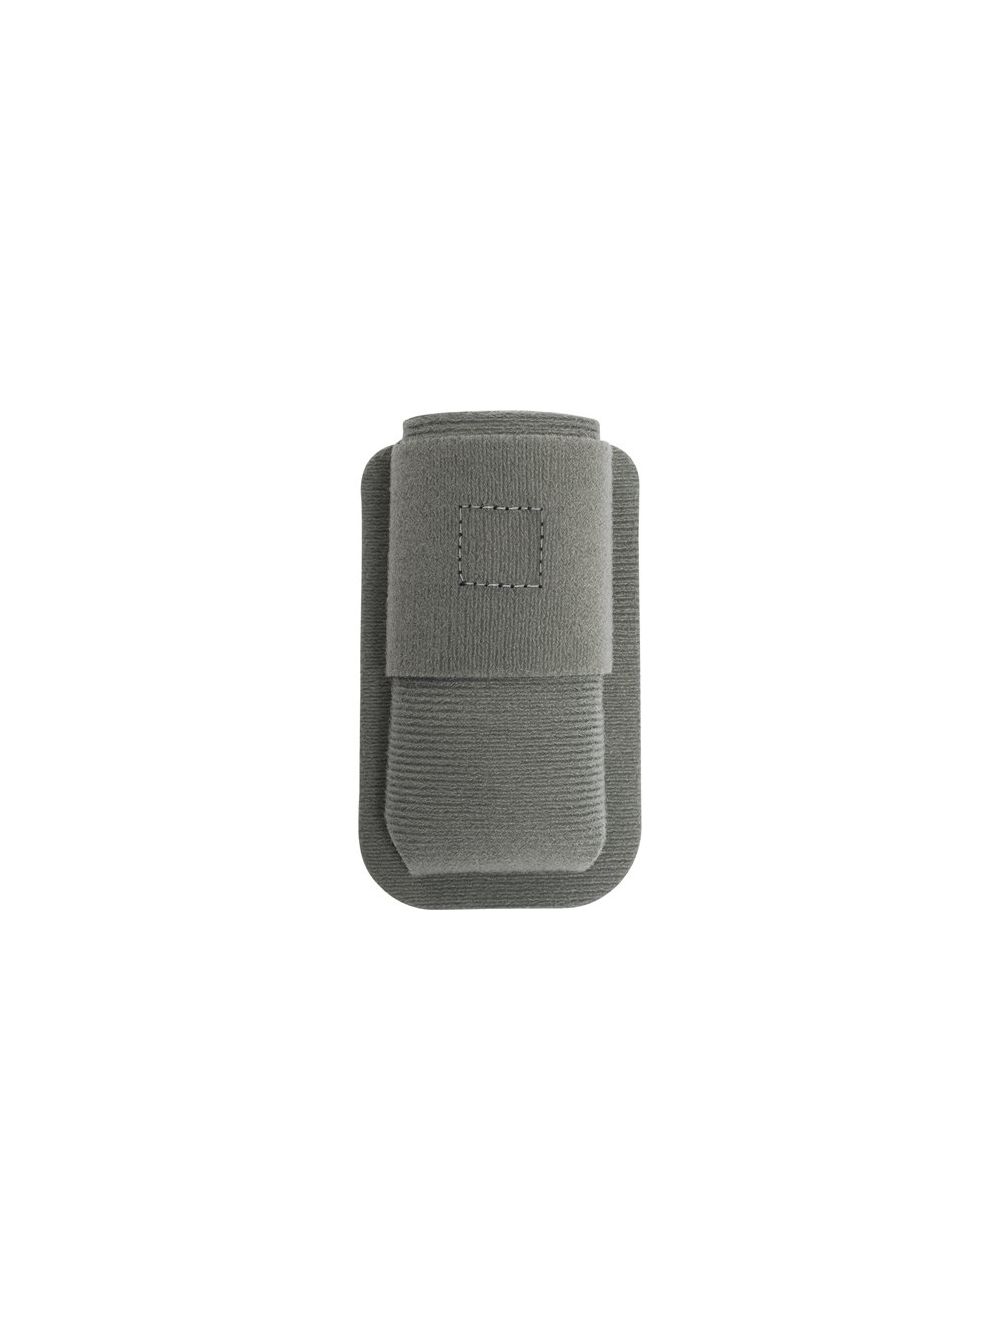 Vertx Tactigami M.A.K. Standard Pocket Mini-Mag